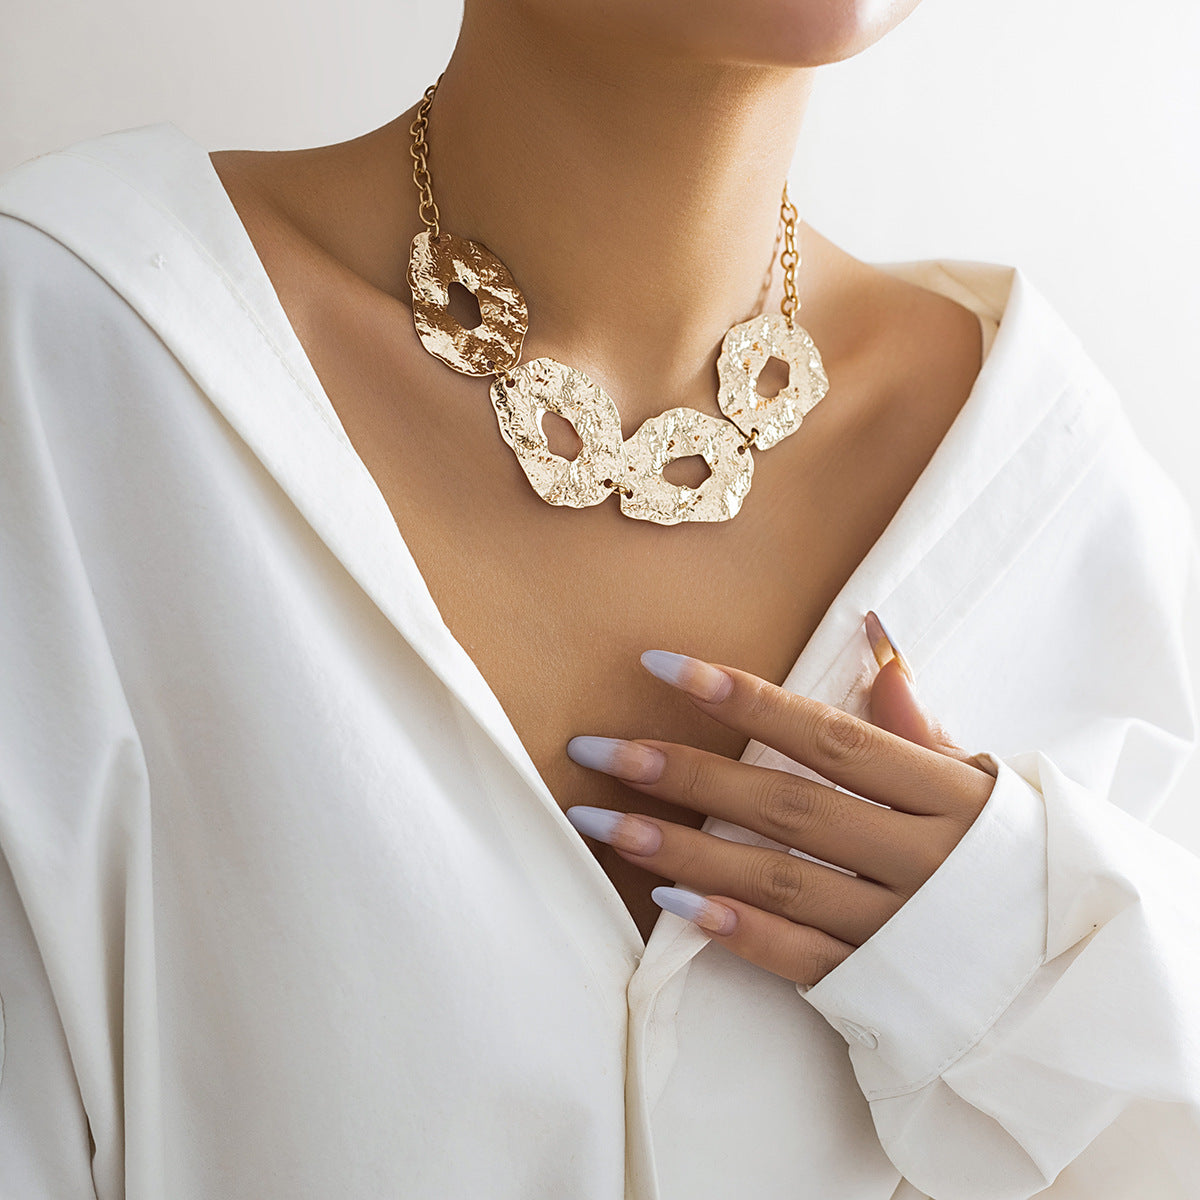 Retro Body Chain Jewelry with Irregular Metal Design for Women